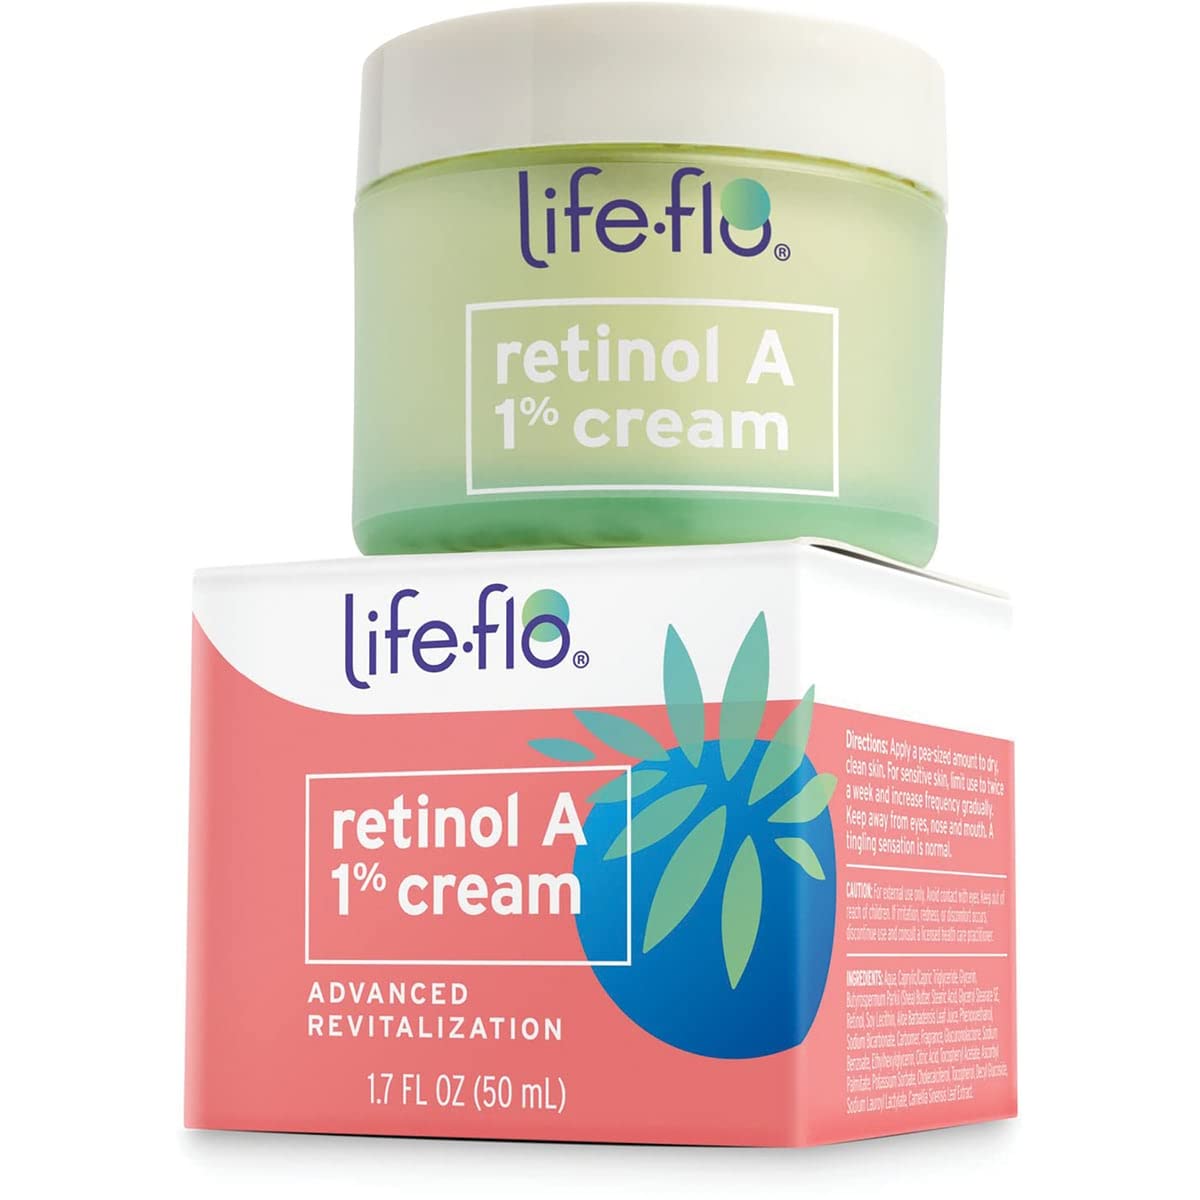 LIFE-O Retinol A 1% Advanced Revitalization Cream | Refines Skin & Diminishes Look of Fine Lines & Wrinkles | 1.7